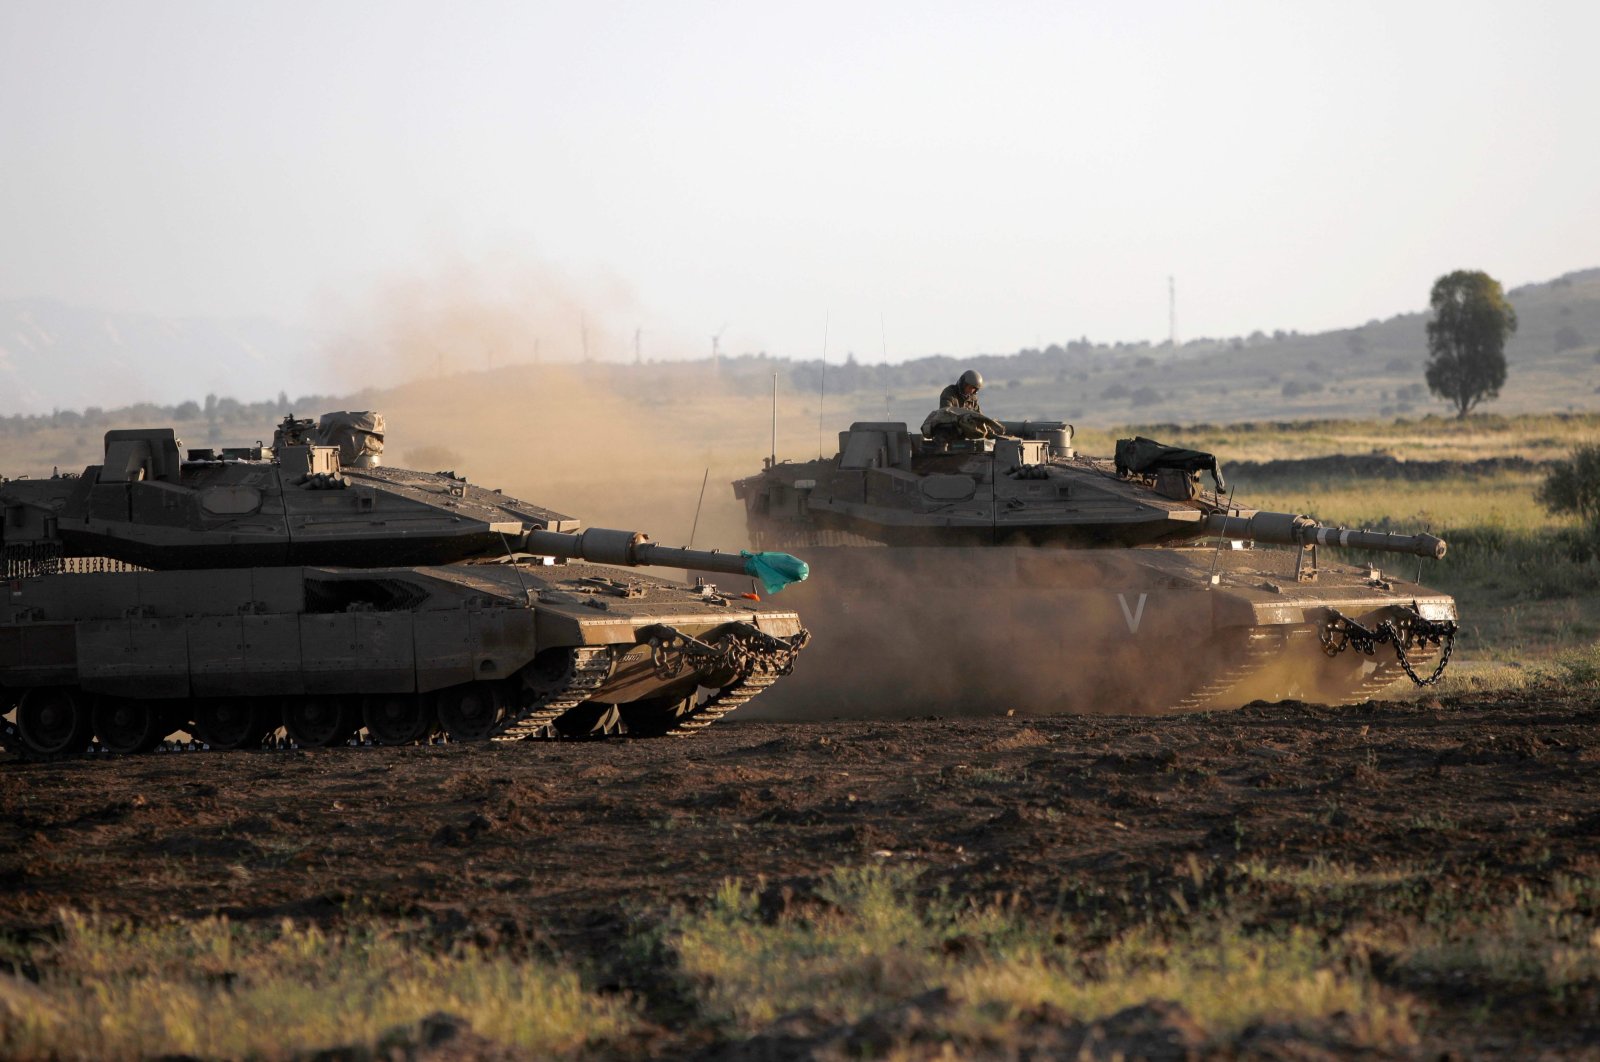 Israeli soldiers ride in Merkava Mark IV battle tanks near Moshav Alonei HaBashan in the Israeli-occupied Golan Heights, April 29, 2021. (AFP Photo)